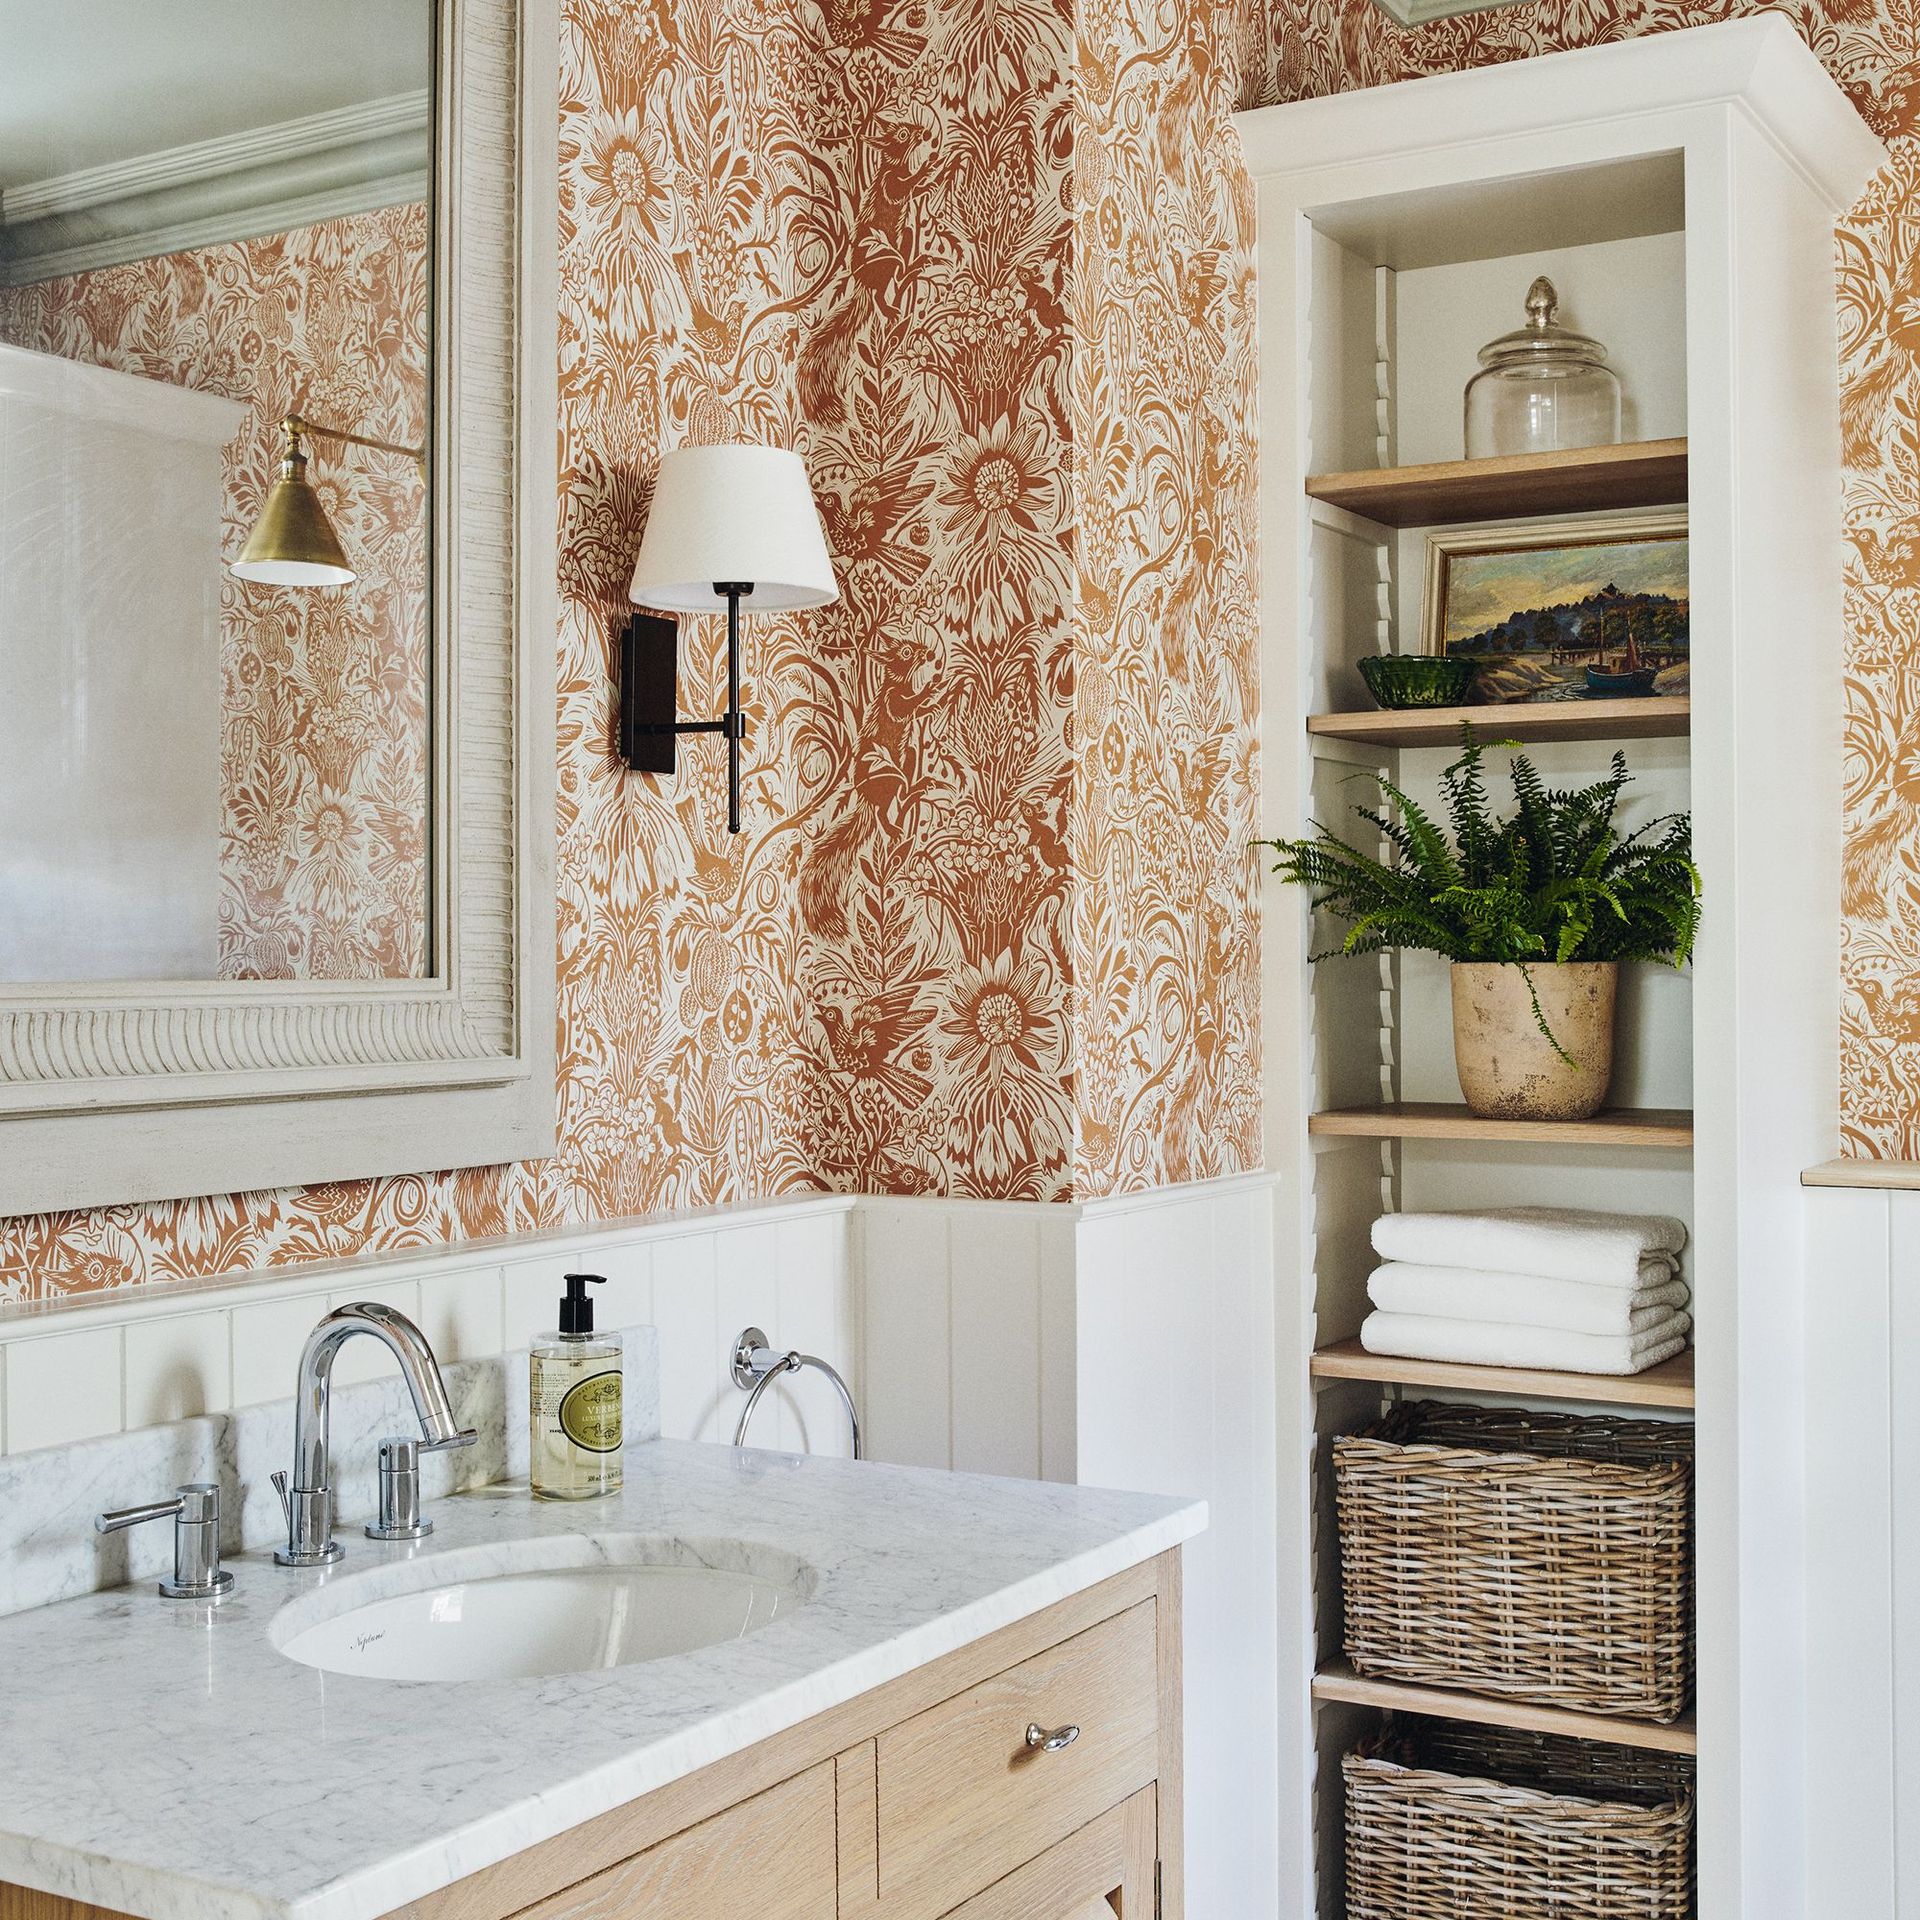 En-suite ideas to design the perfect bathroom retreat